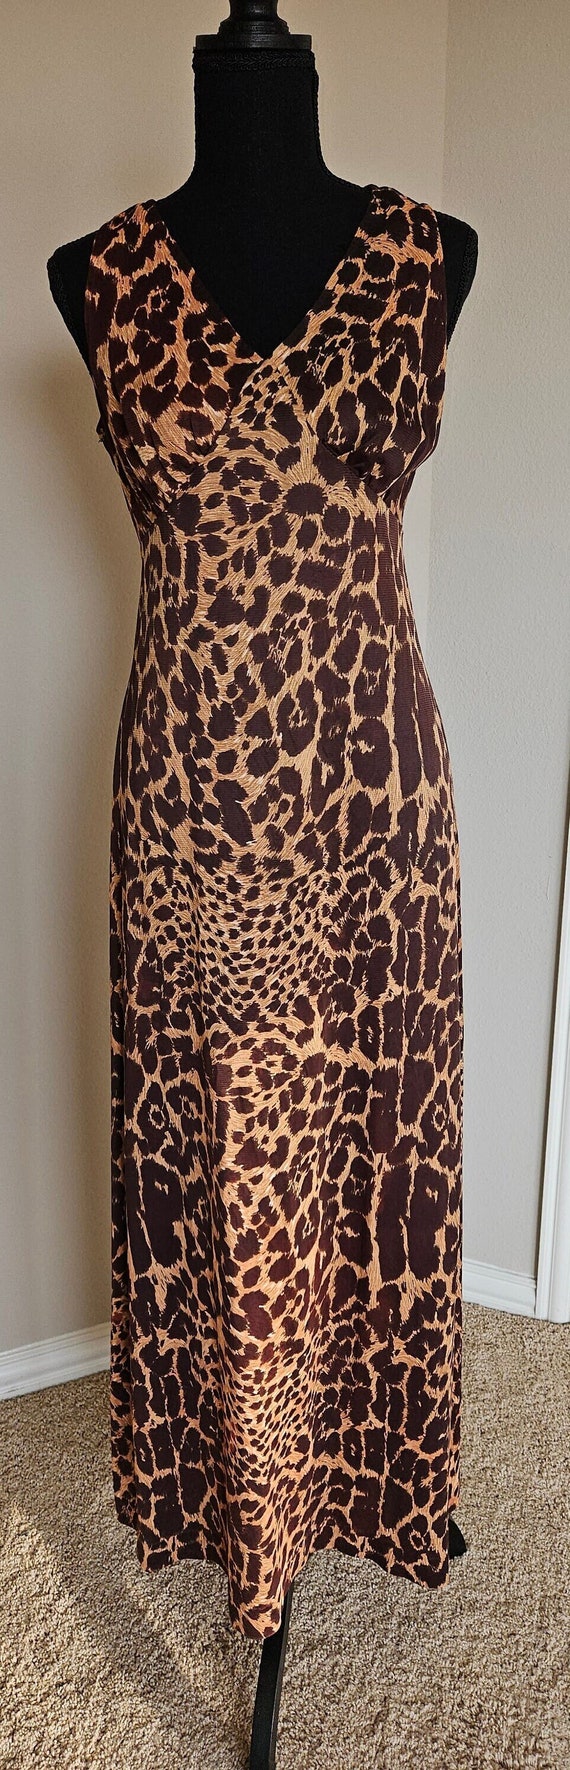 80s Slinky Leopard Print Sheath Dress - Retro Chic